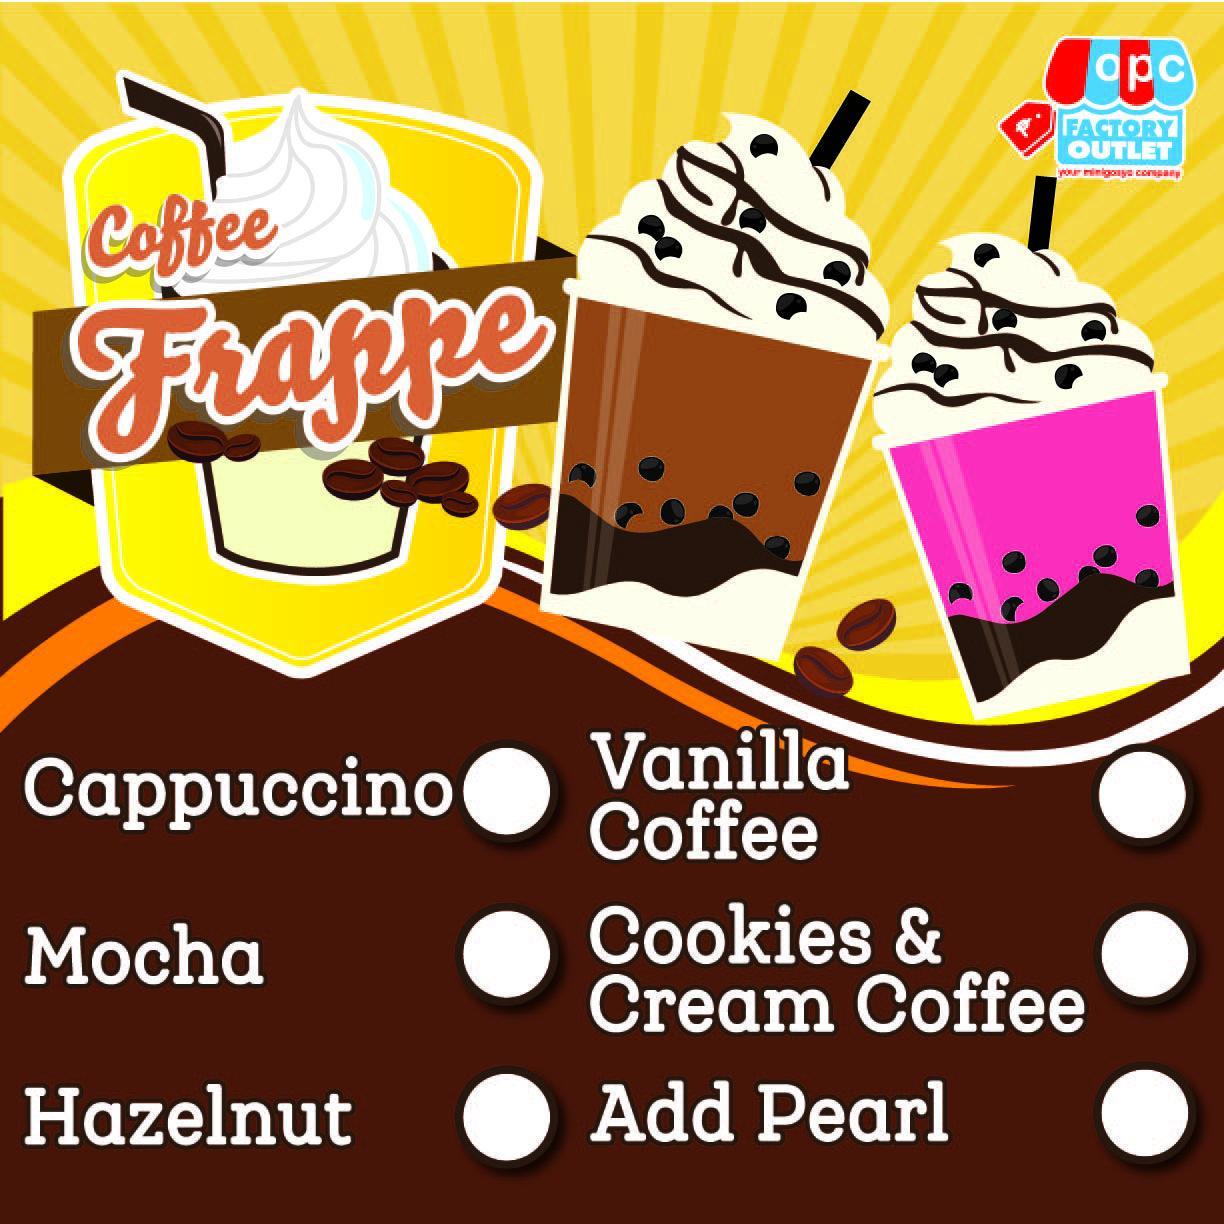 OPC Coffee Frappe Menu Tarp 17x17 in